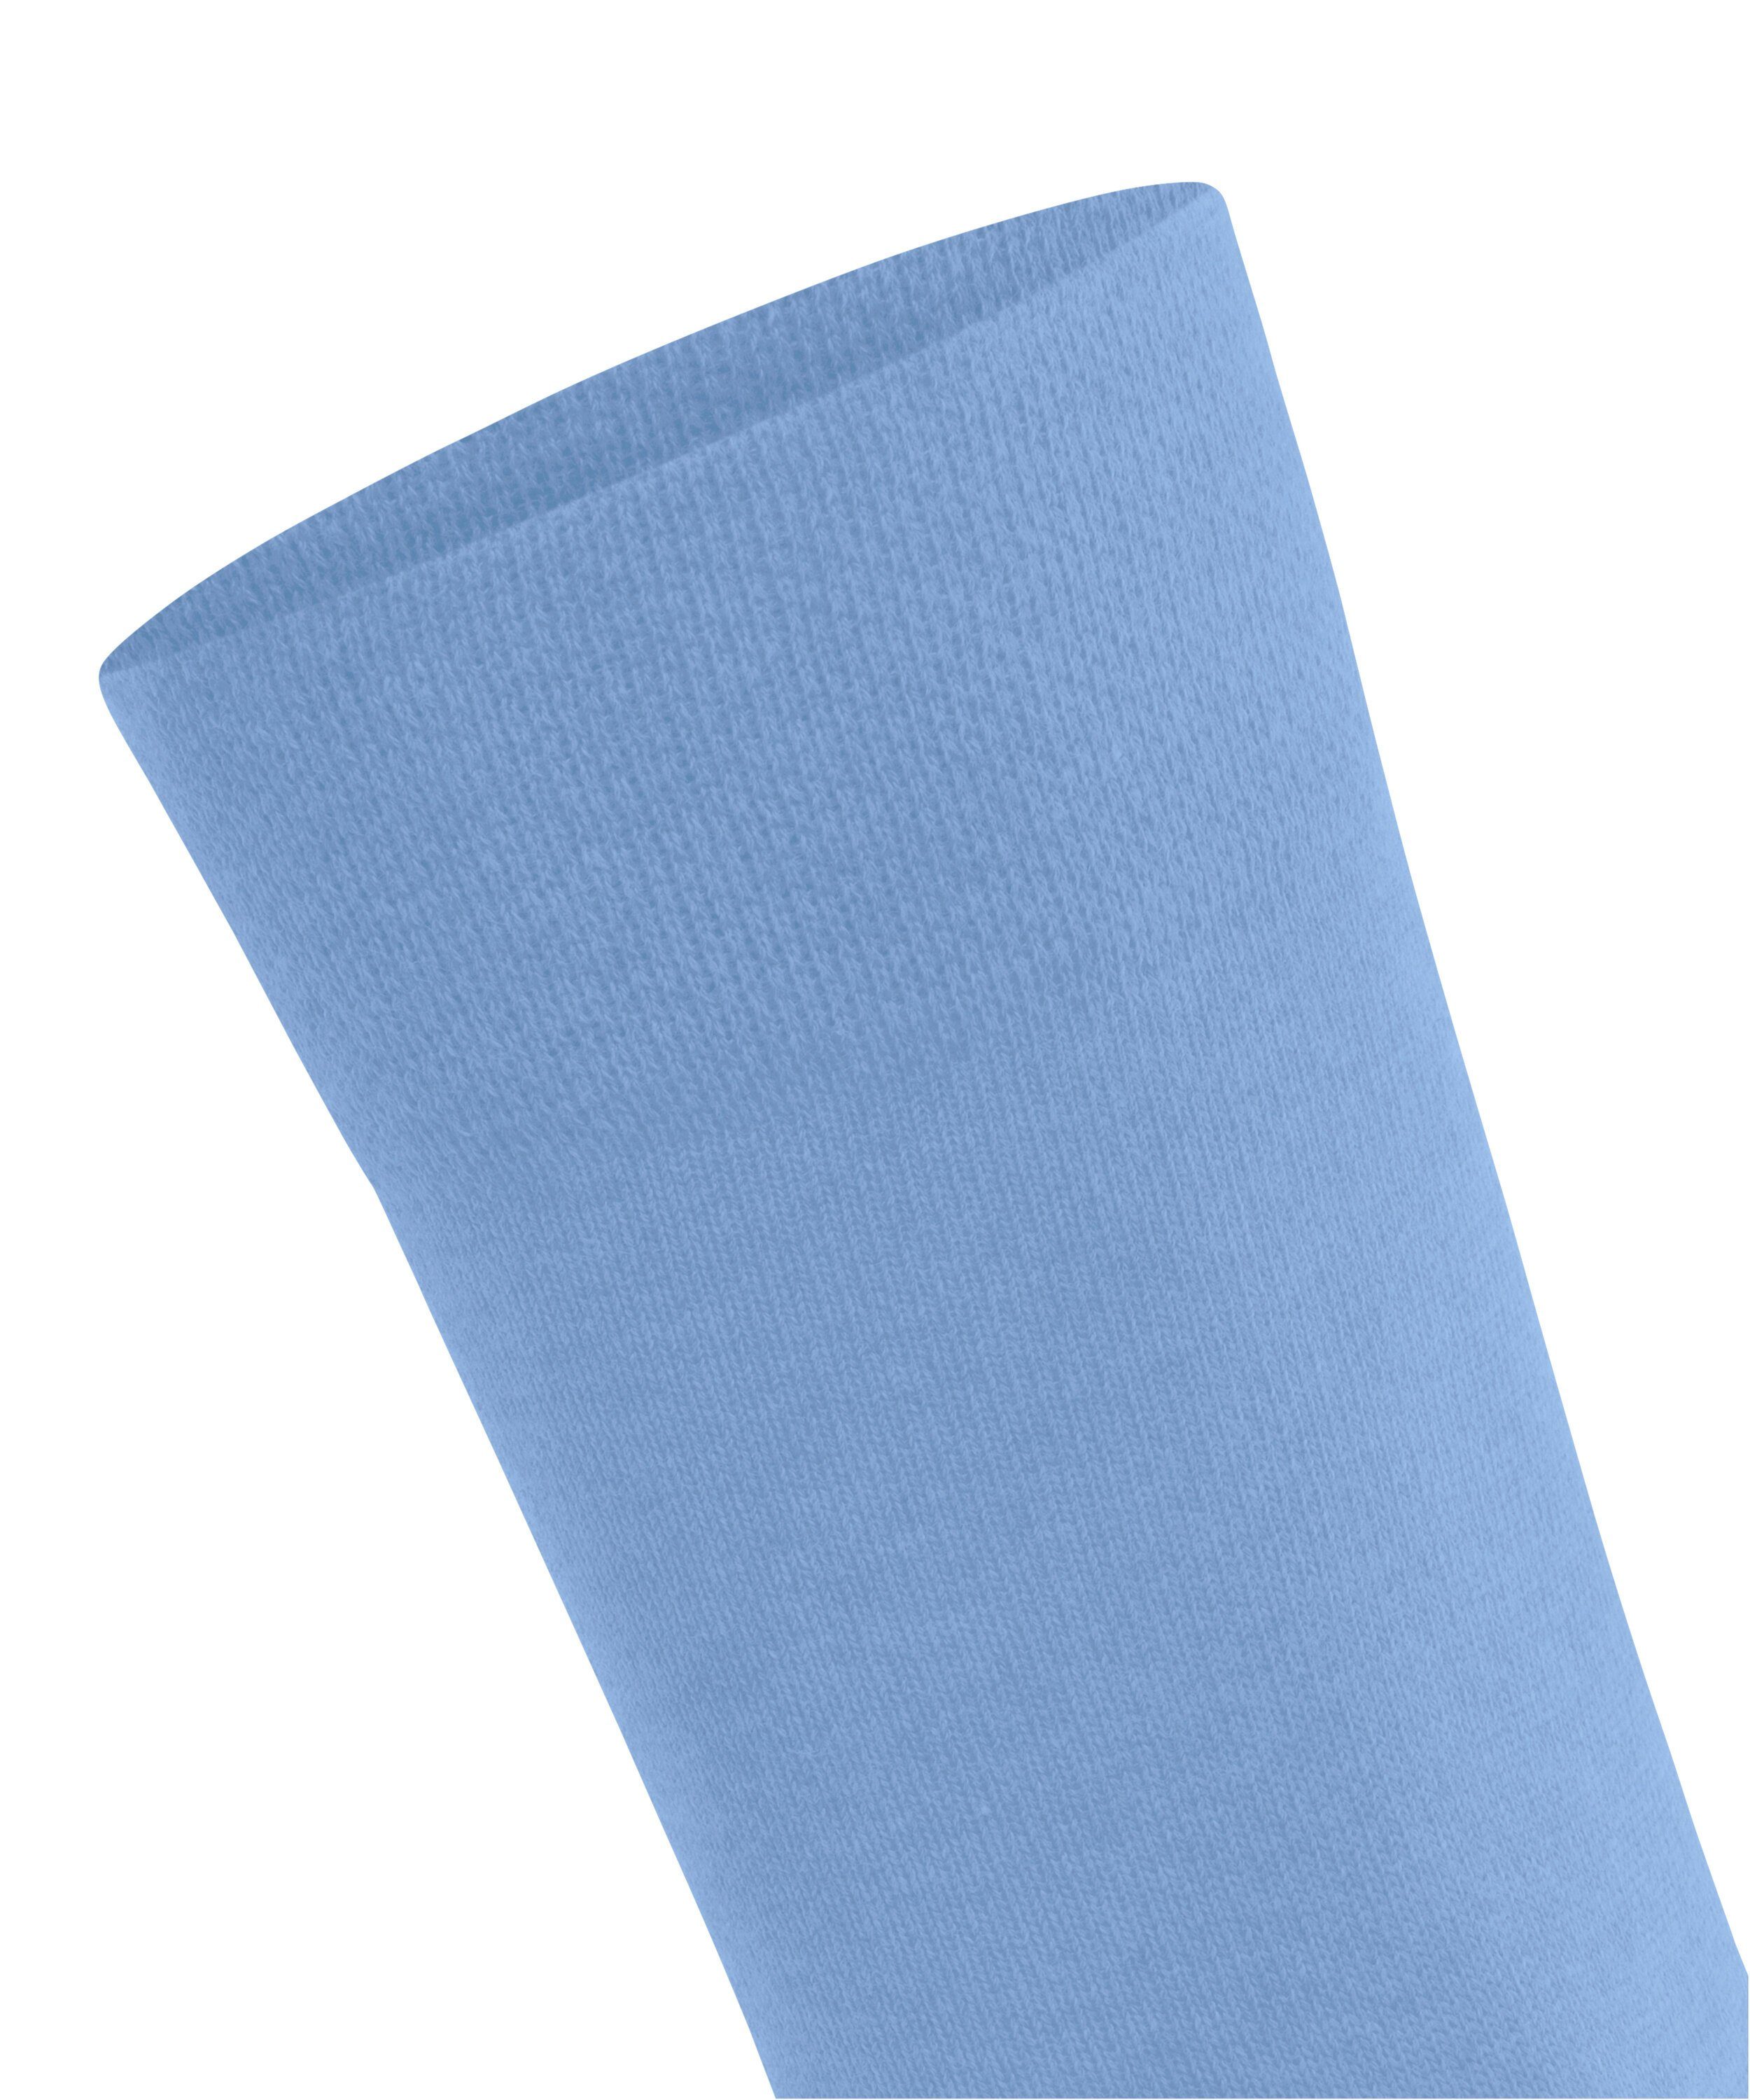 FALKE (1-Paar) Socken (6367) London arcticblue Sensitive